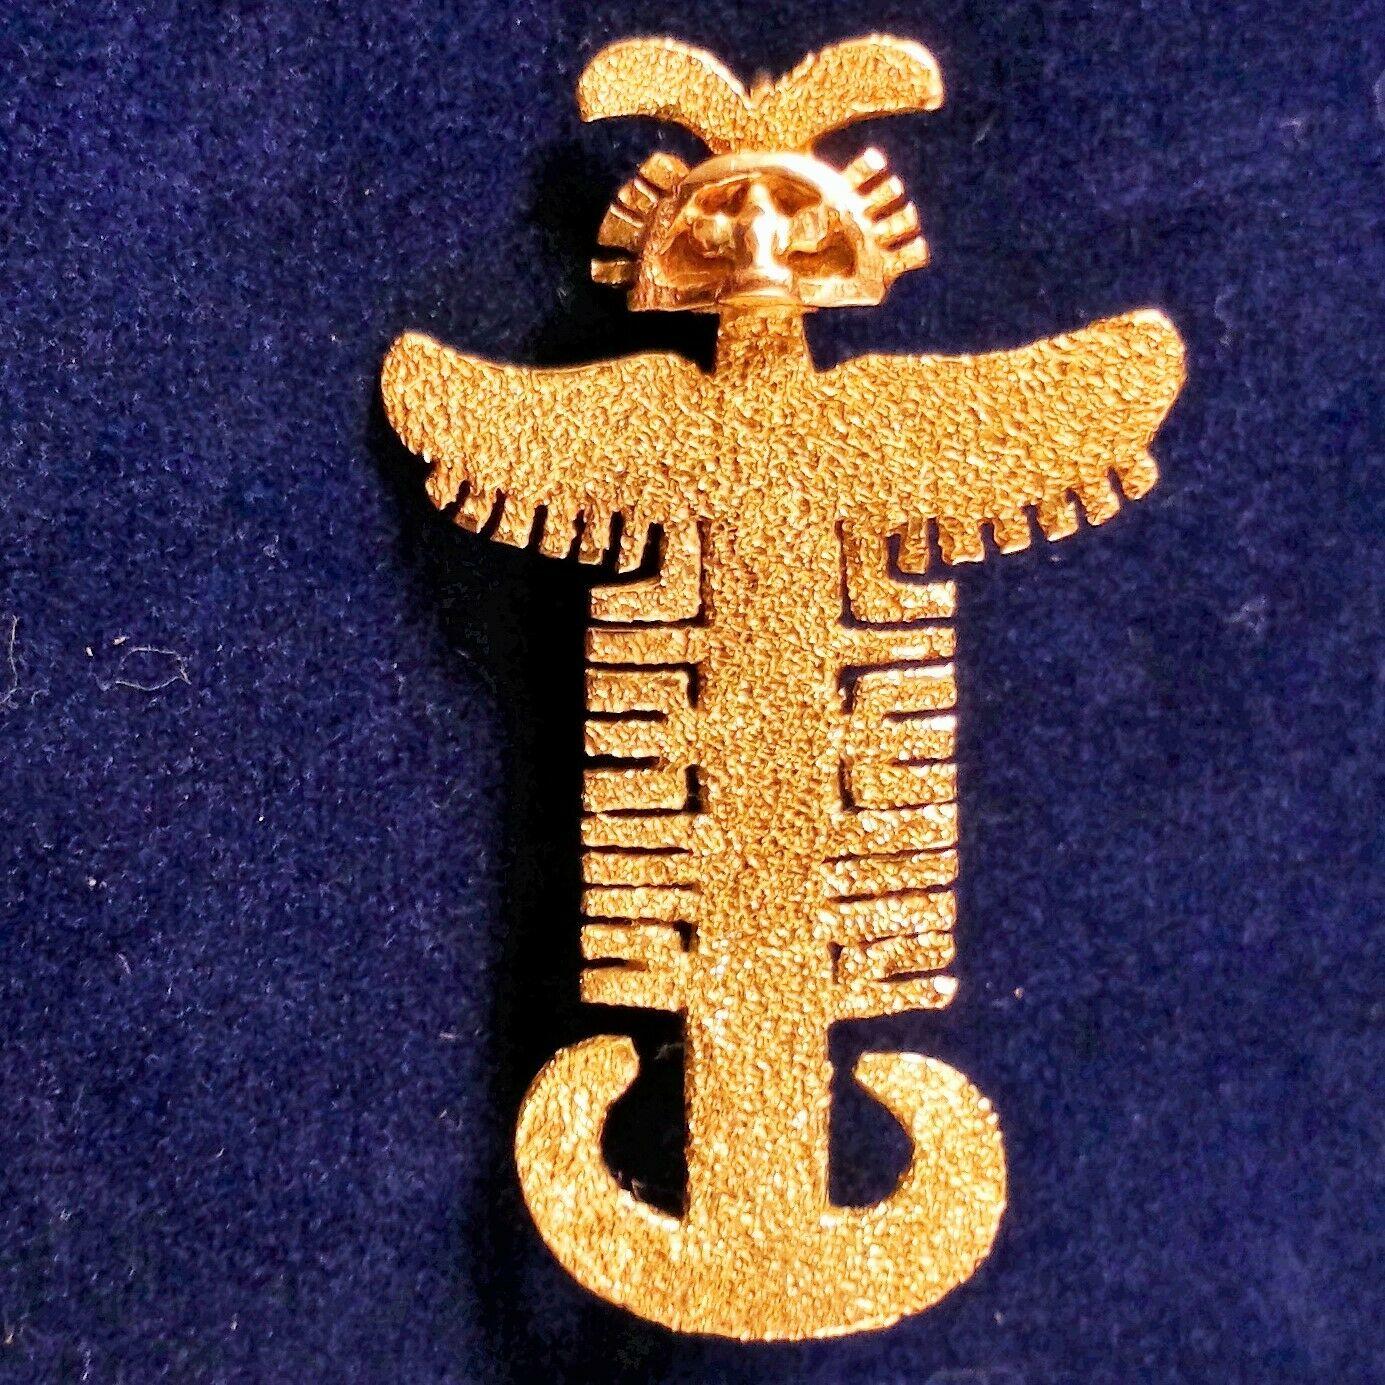 18ct Gold Handmade Designer Brooch Pendant Totem Stylised Bird by Dagmar 4.2g